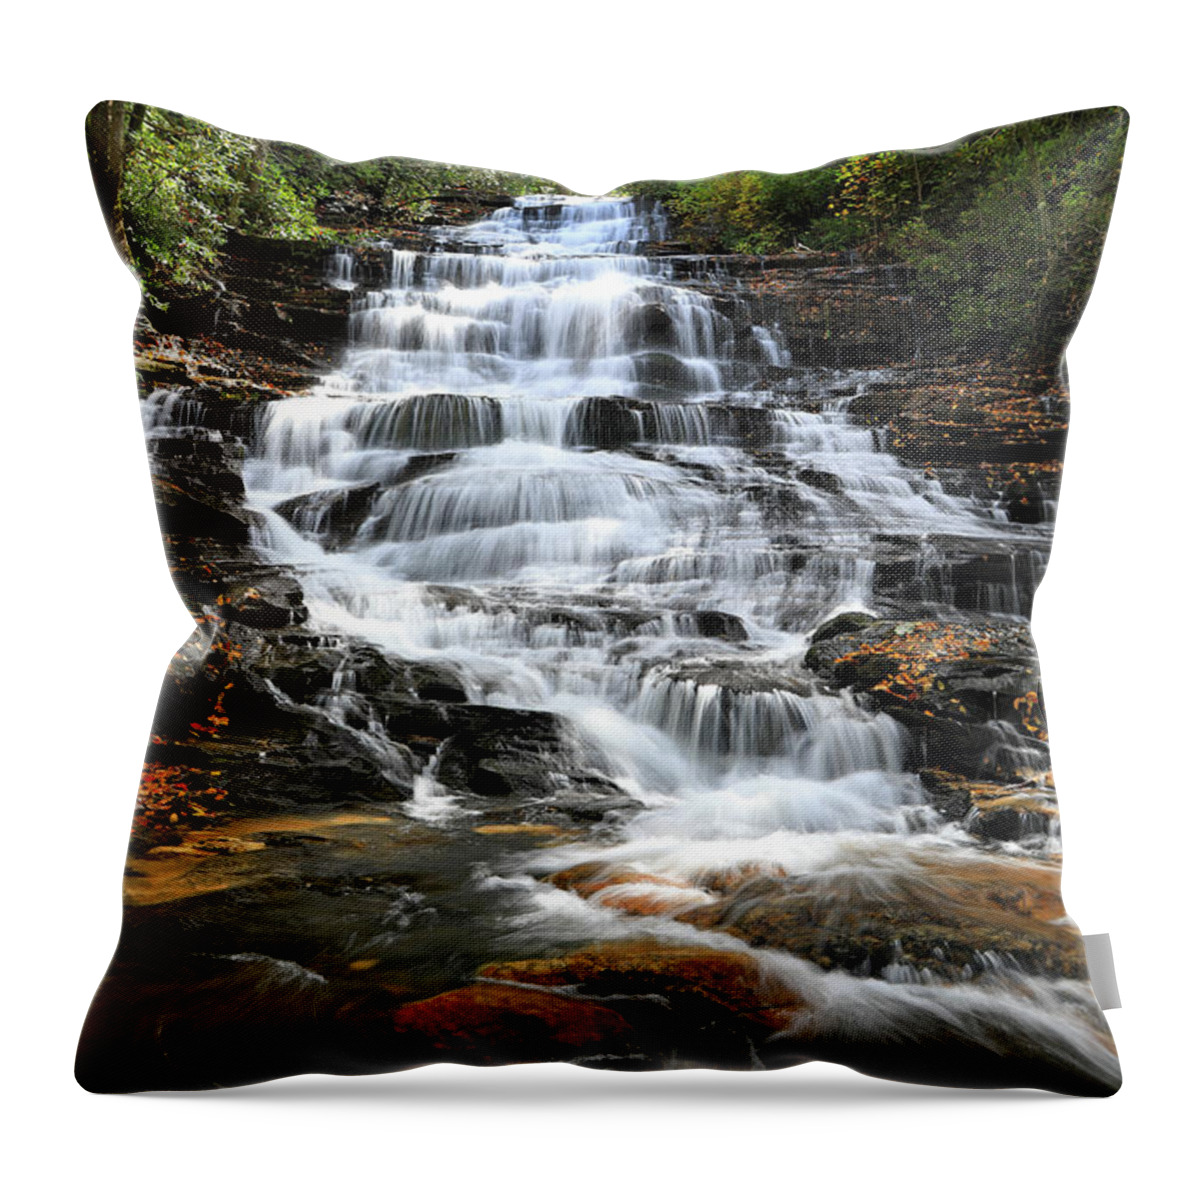 Waterfall Throw Pillow featuring the photograph Minnehaha Waterfall - Georgia by Richard Krebs